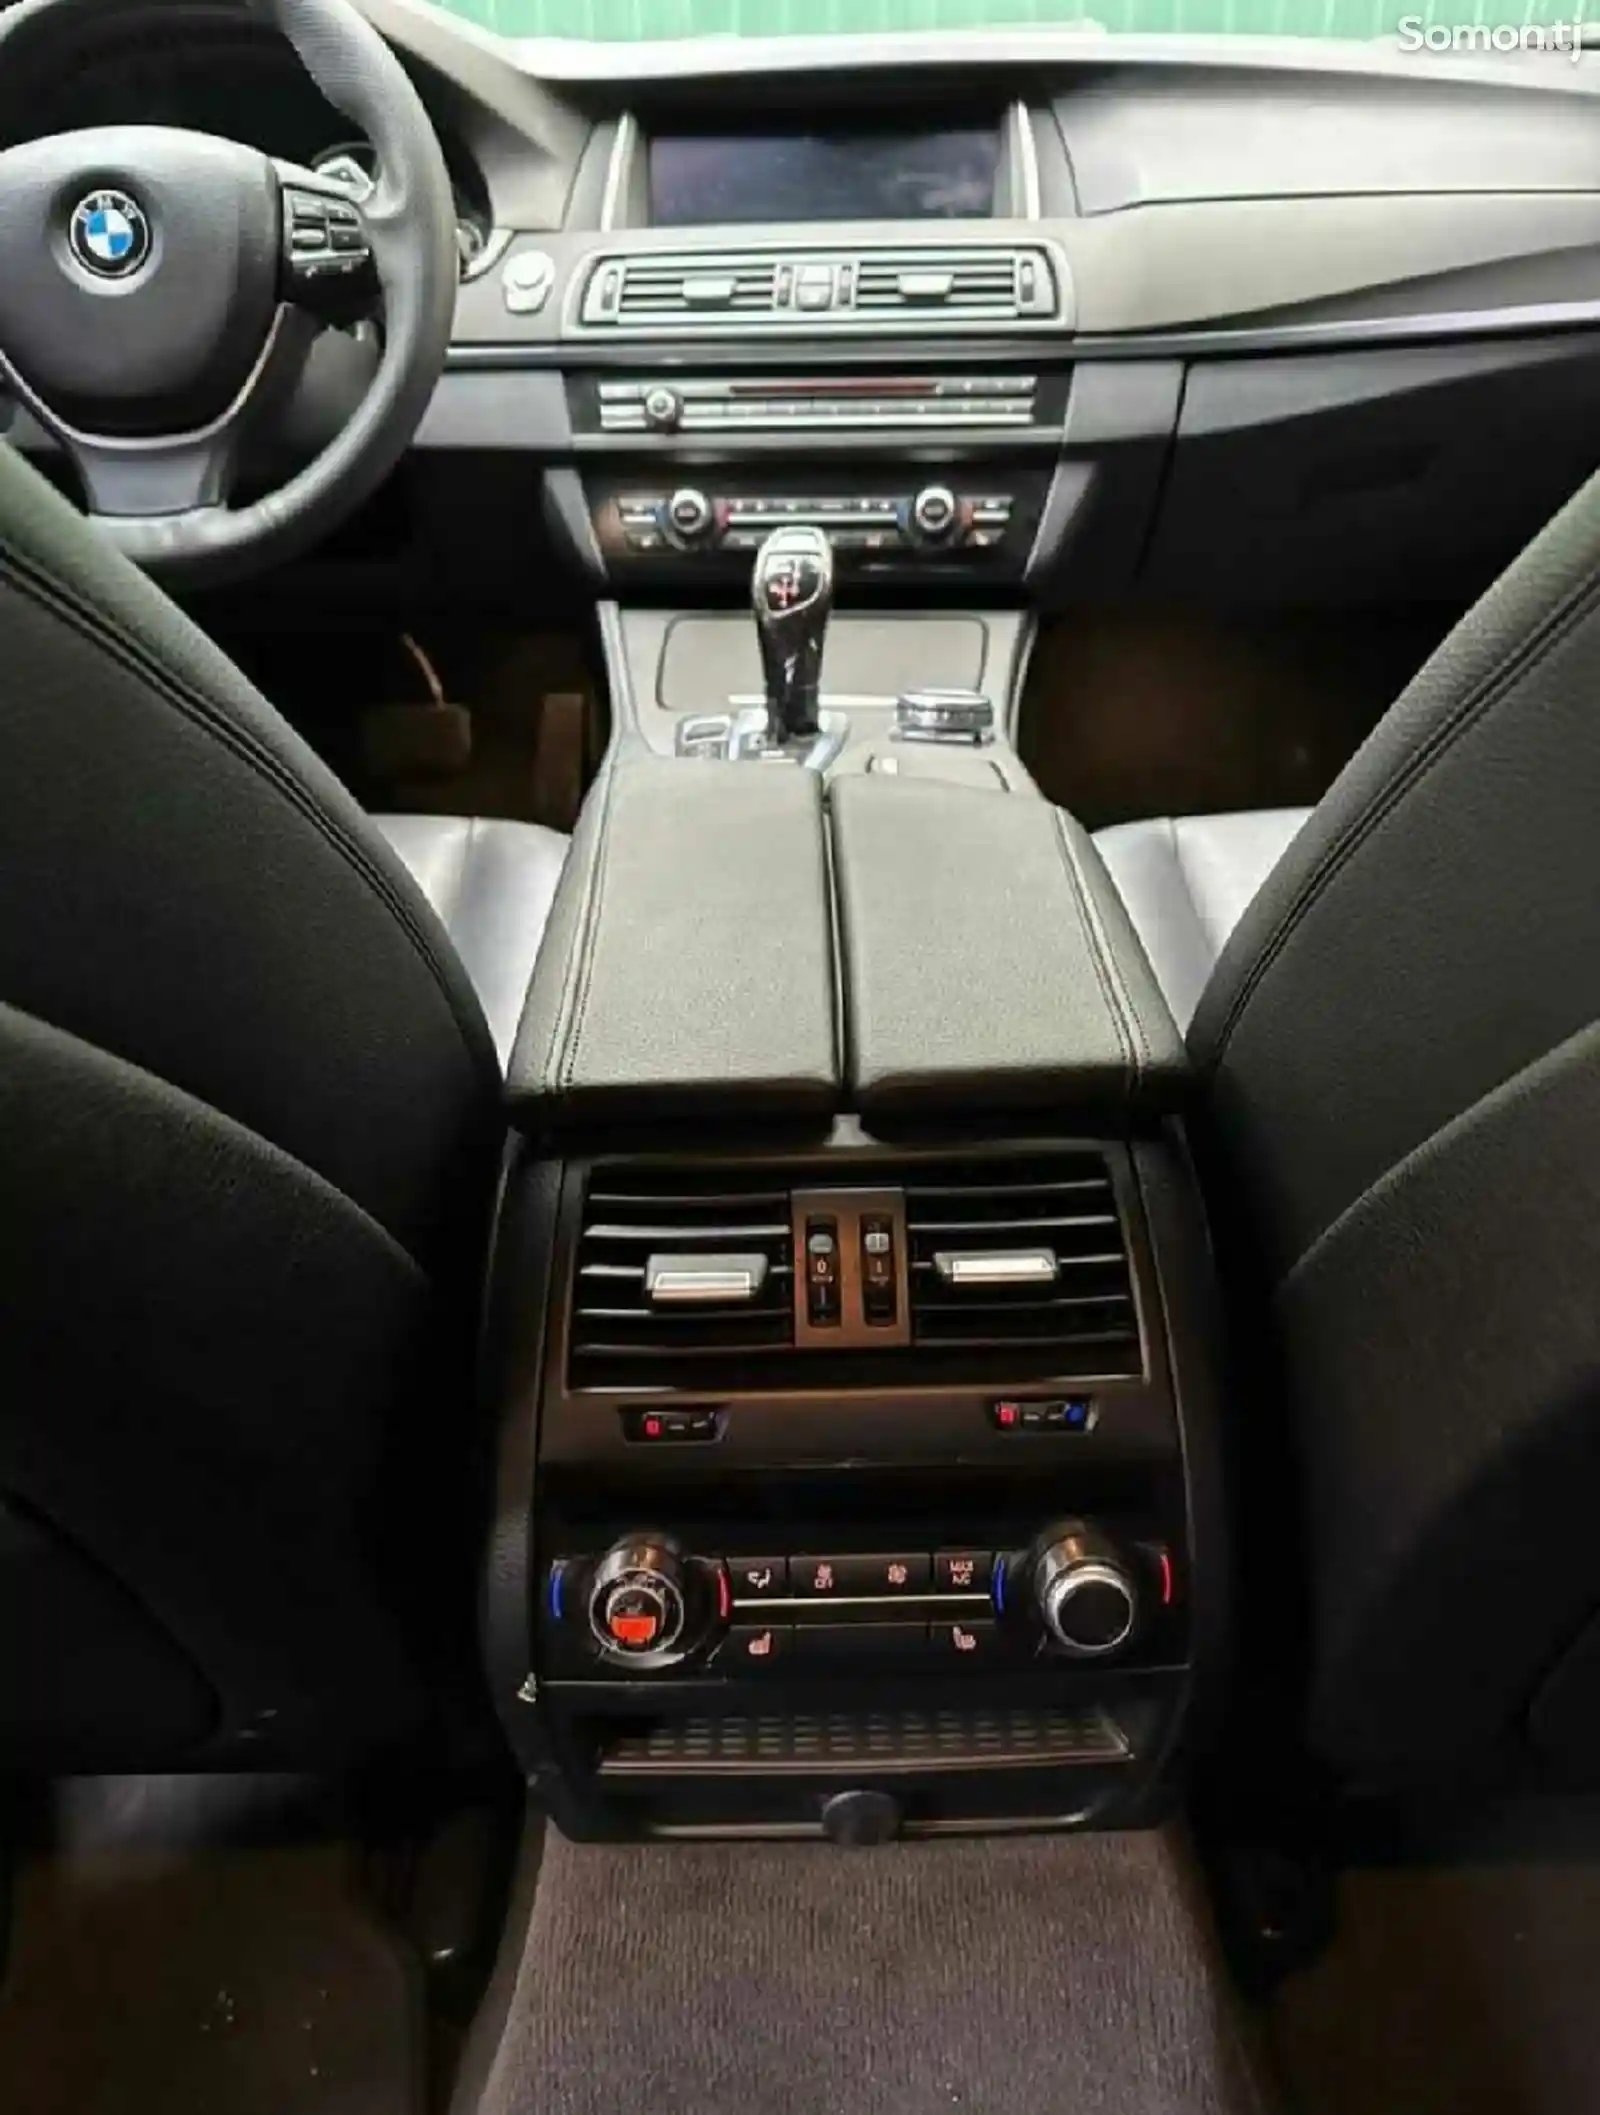 BMW 5 series, 2015-2